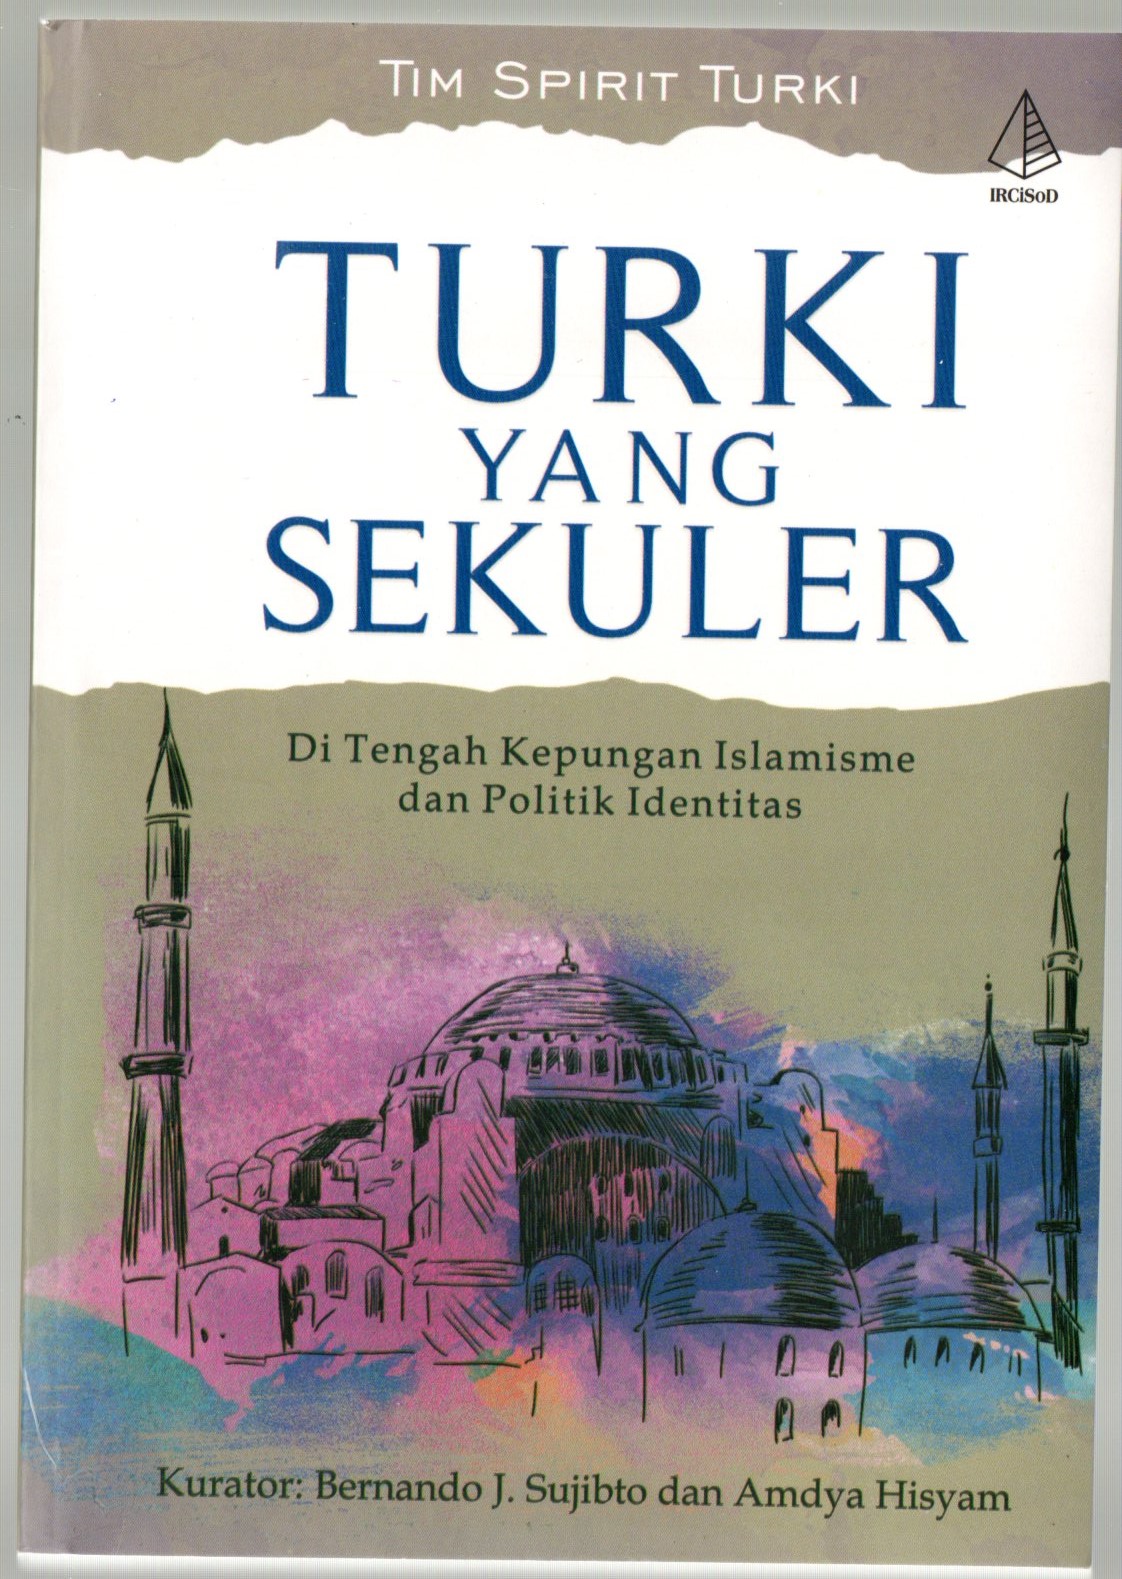 Turki yang sekuler